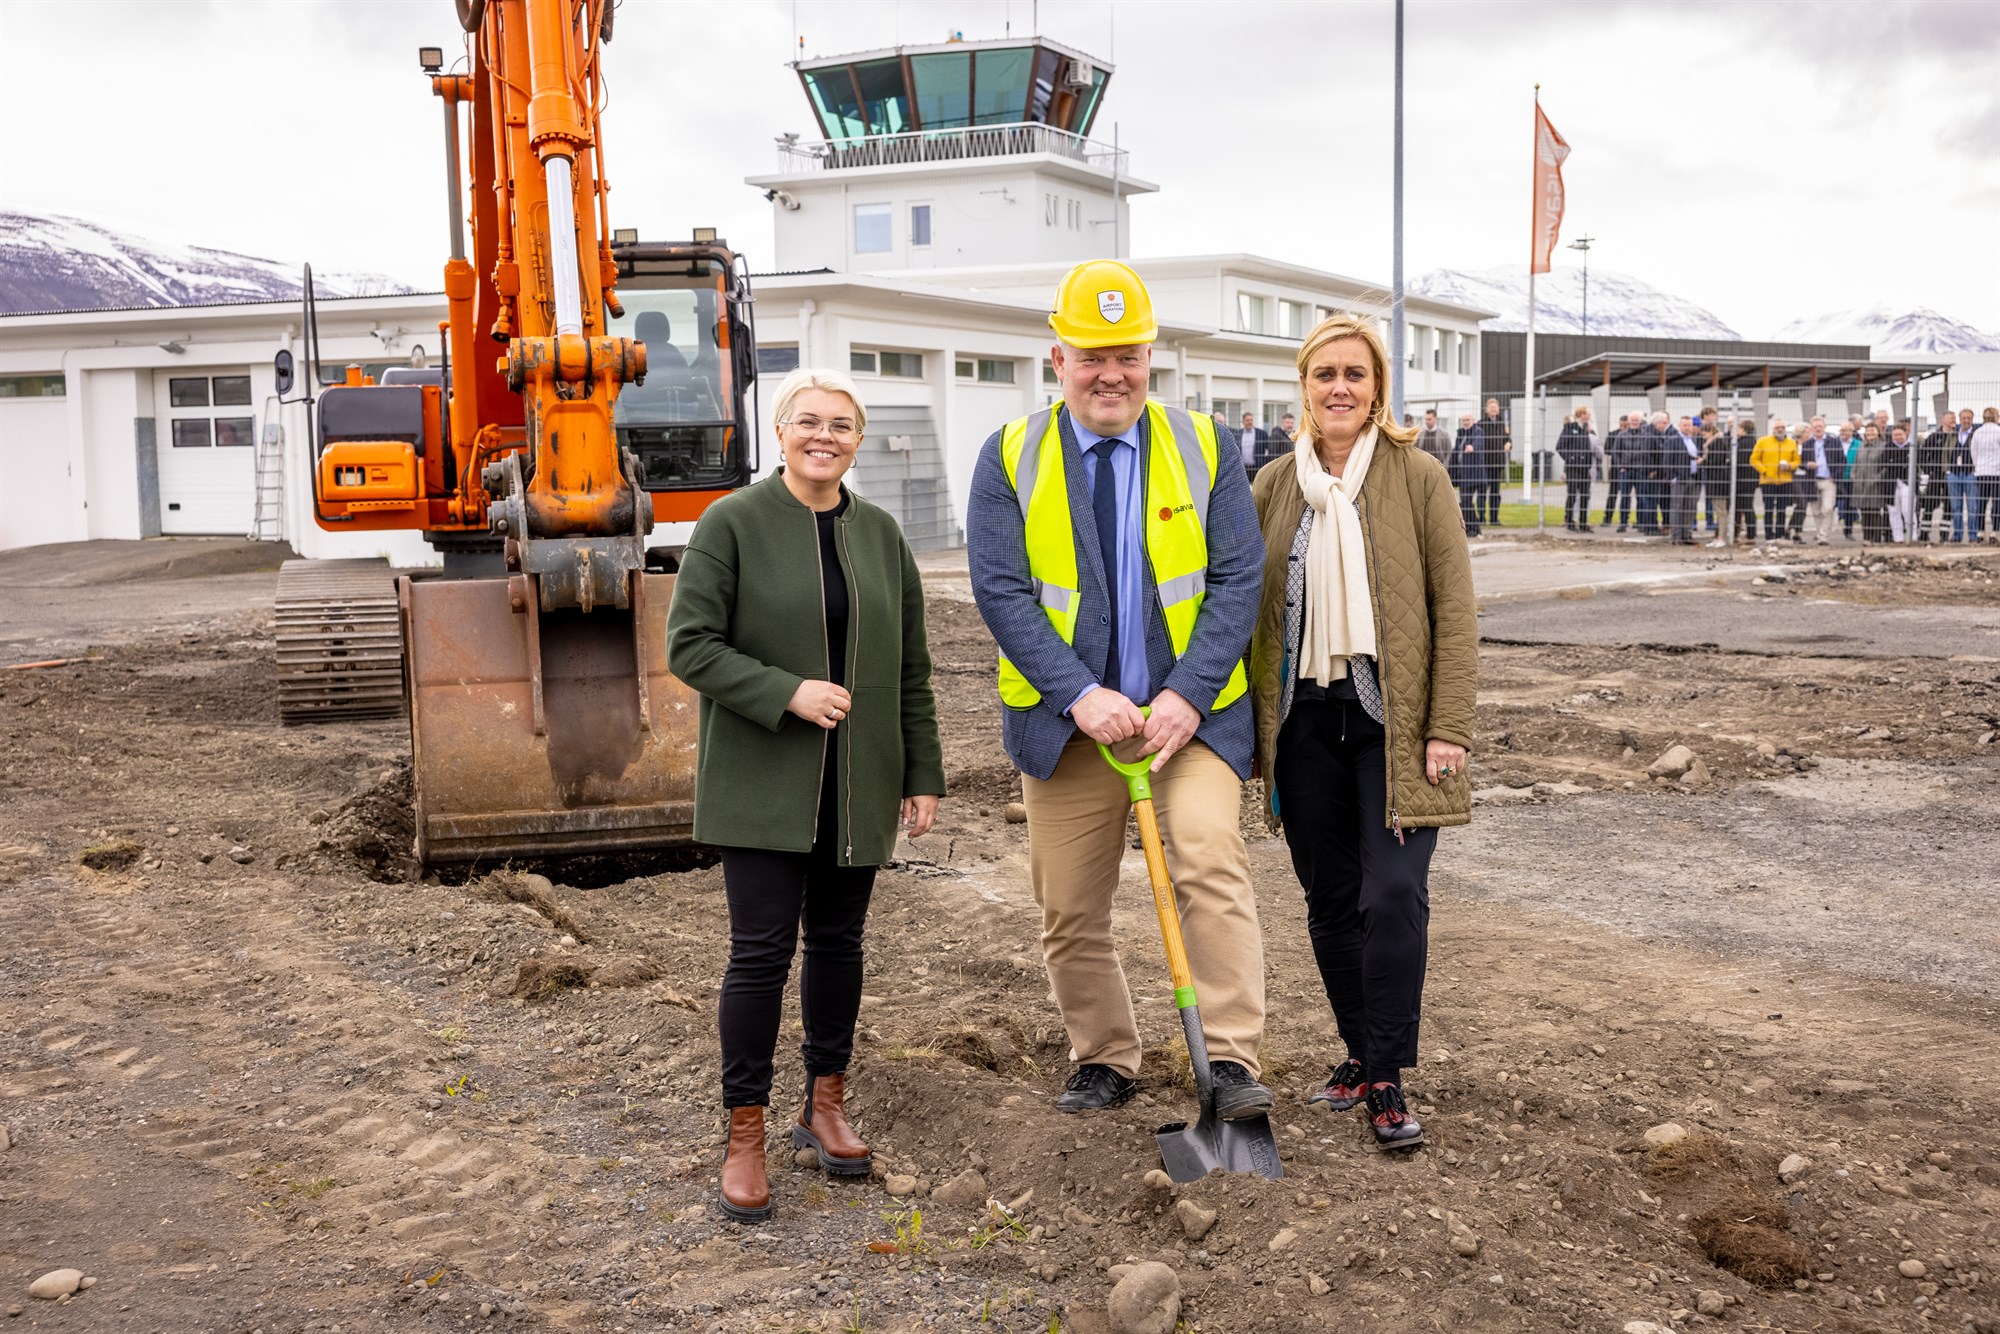 Ground broken on an addition to terminal at Akureyri Airport